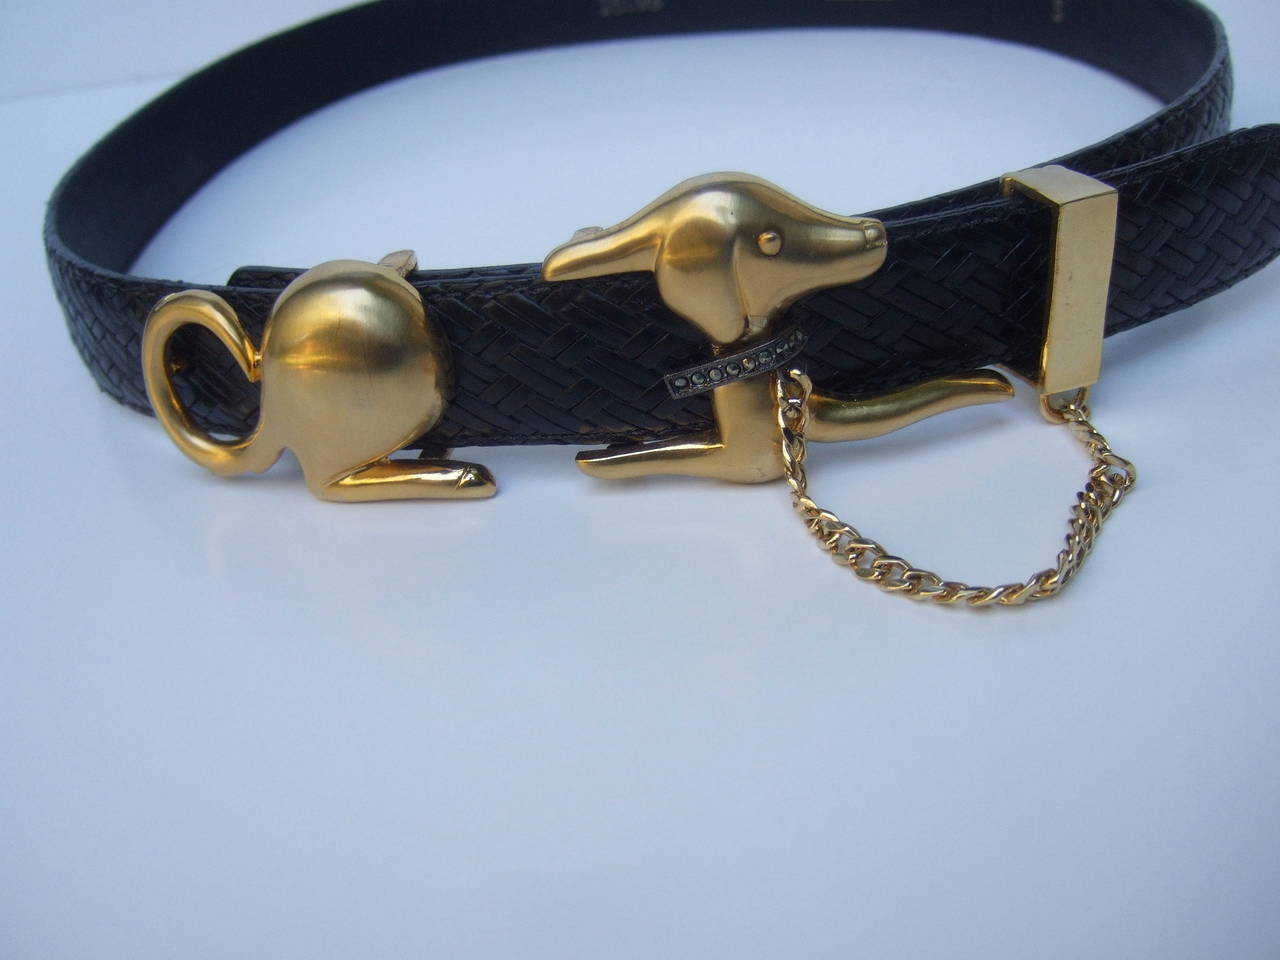 Women's Stylish Unique Canine Buckle Black Leather Belt Designed by Carlise